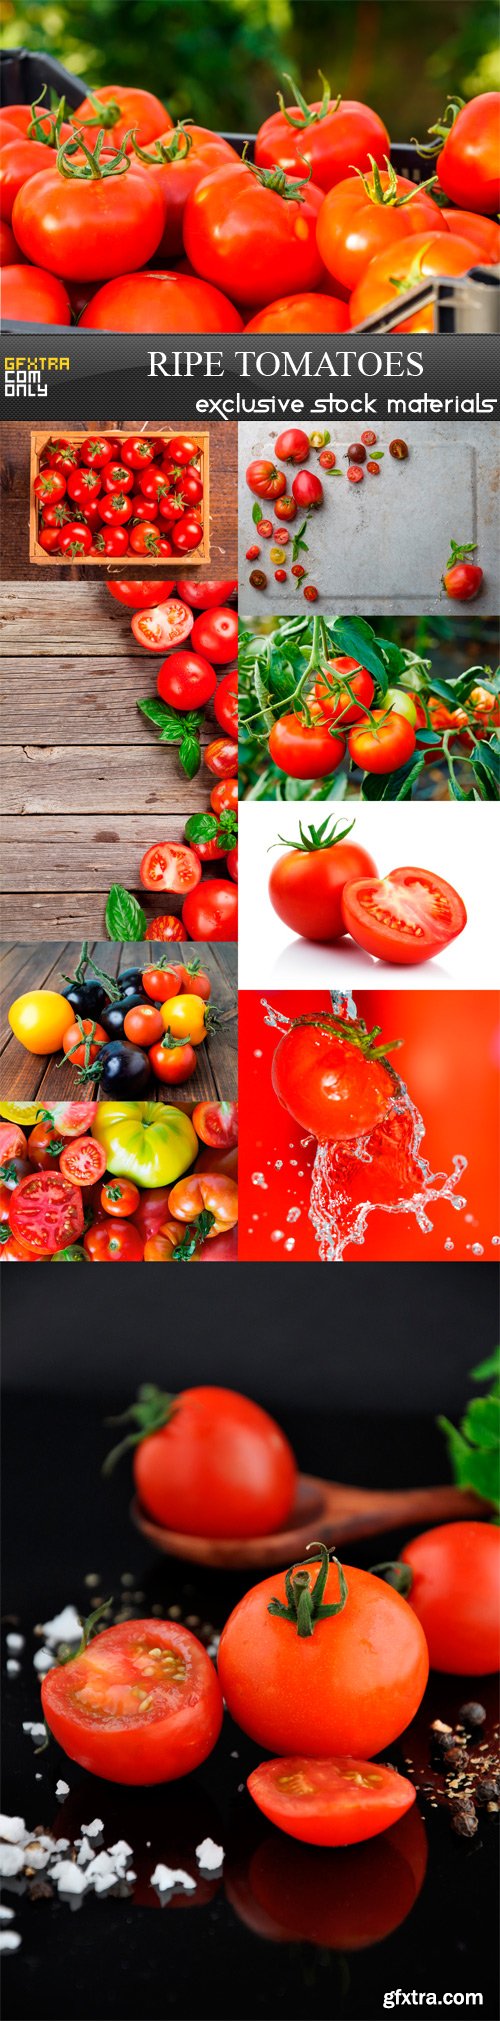 Ripe tomatoes - 10 UHQ JPEG